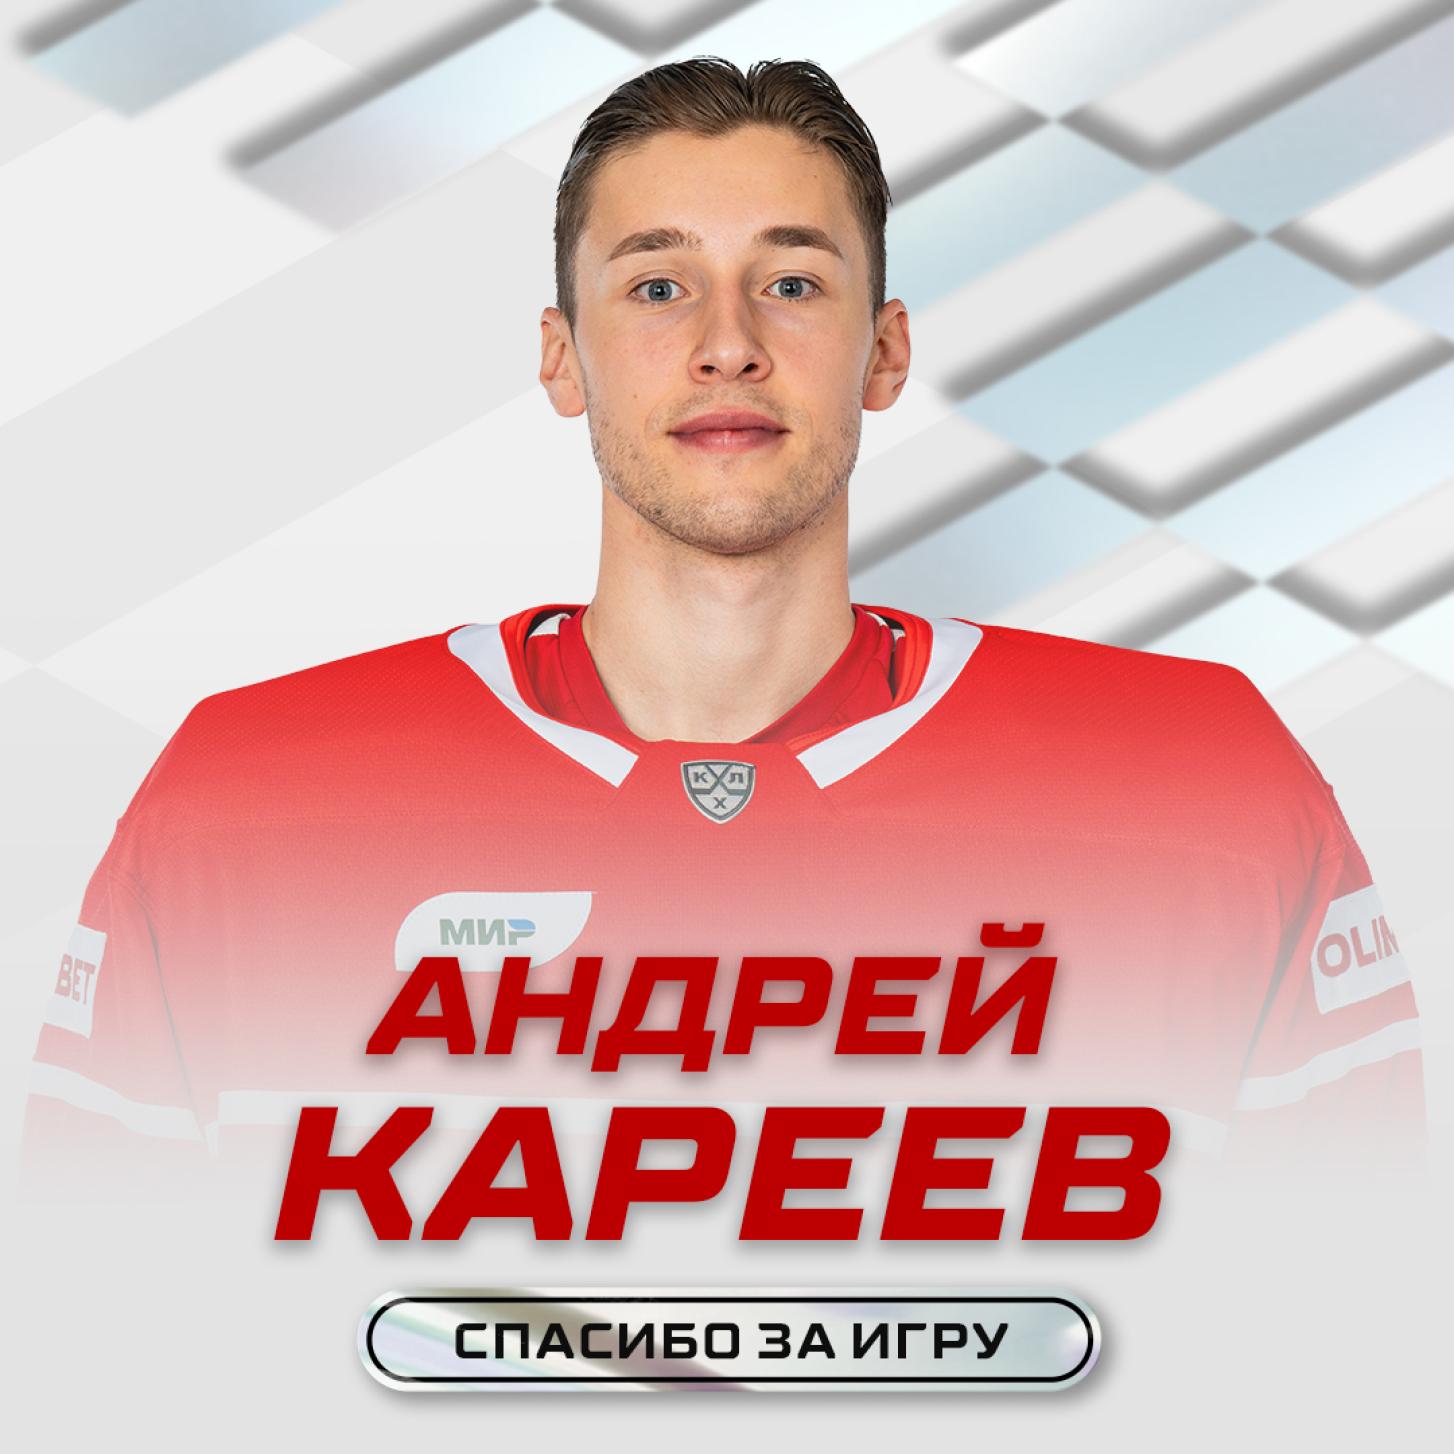 Андрей Кареев, спасибо за игру!